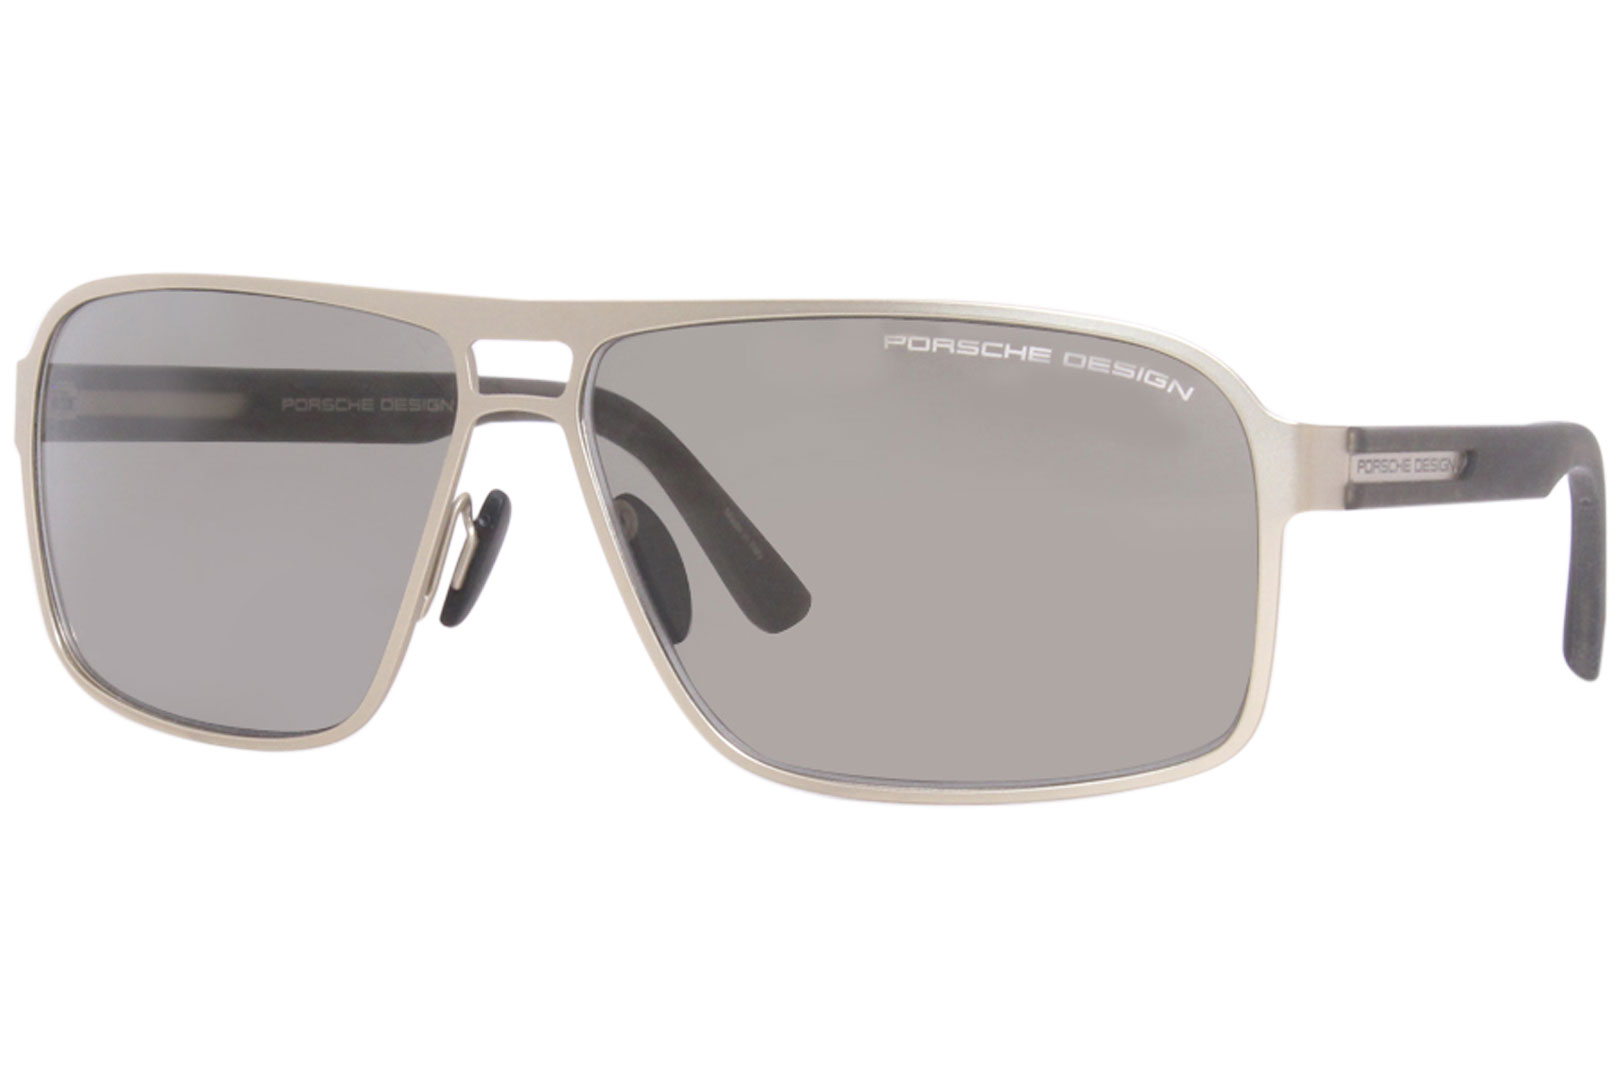 Porsche Design Men's P8562 Sunglasses | EyeSpecs.com